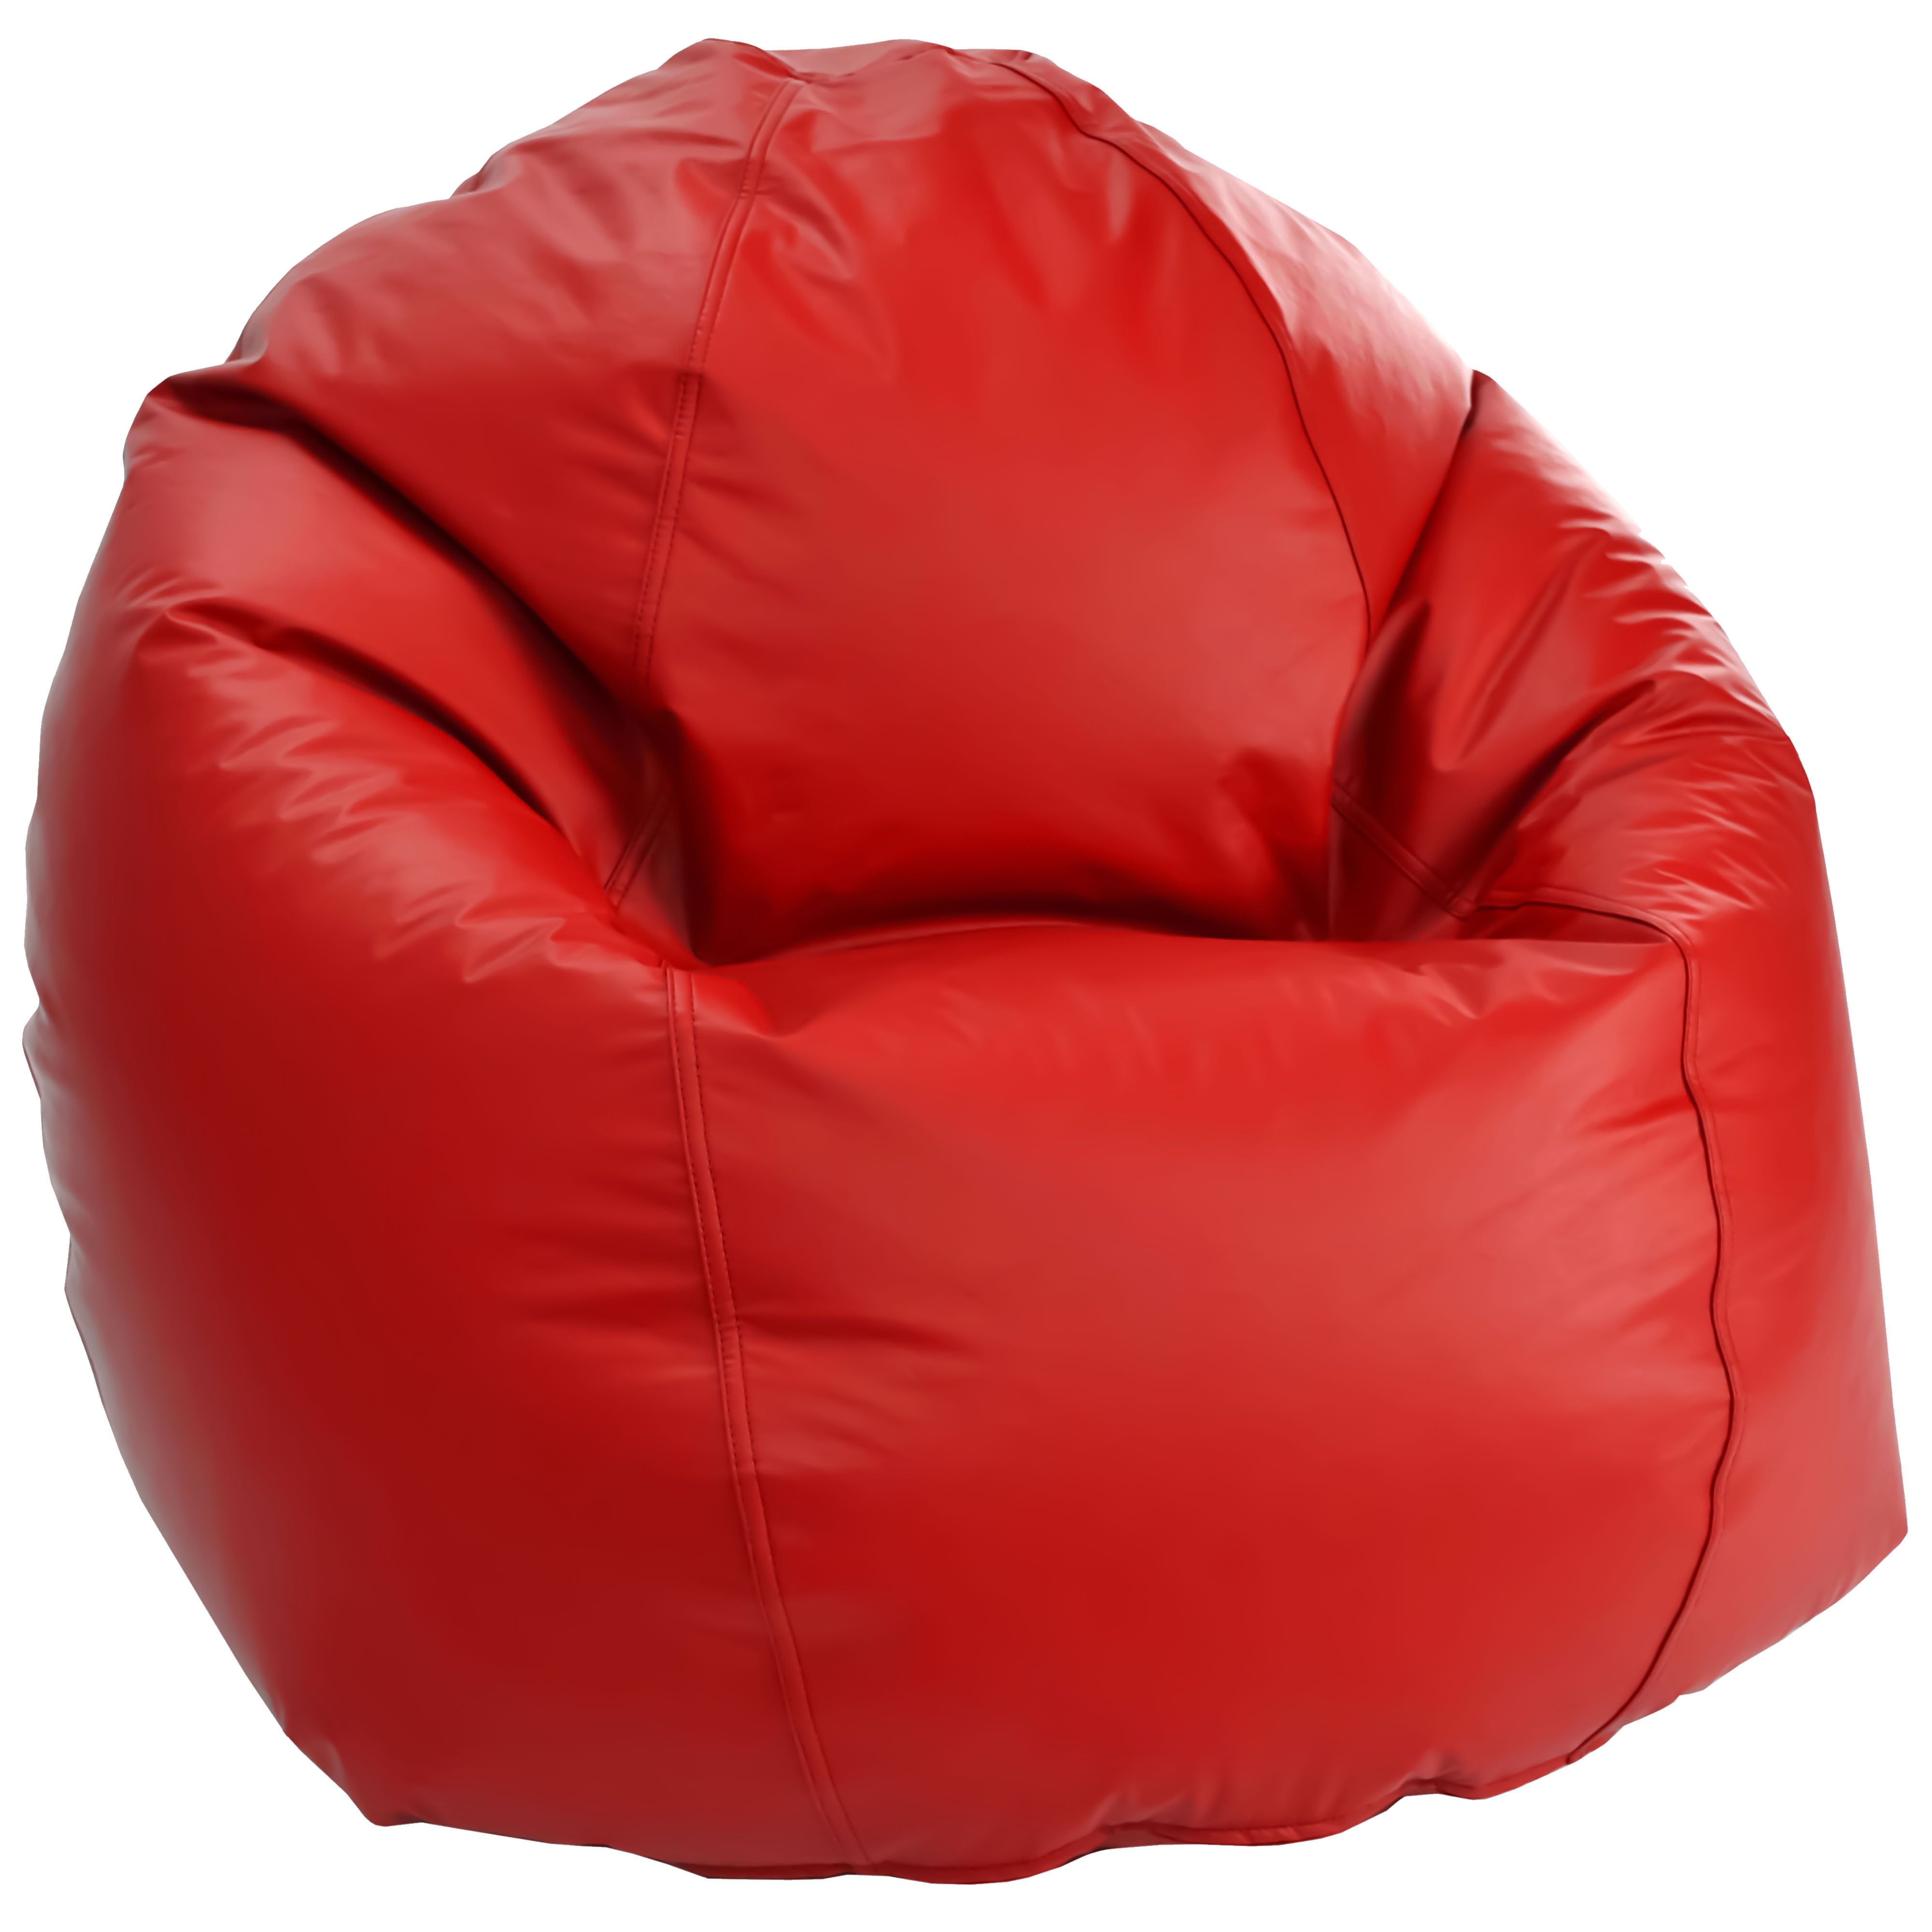 Round Vinyl Bean Bag Chair Faux Leather Teens Kids Gaming Dorm Multiple colors L 